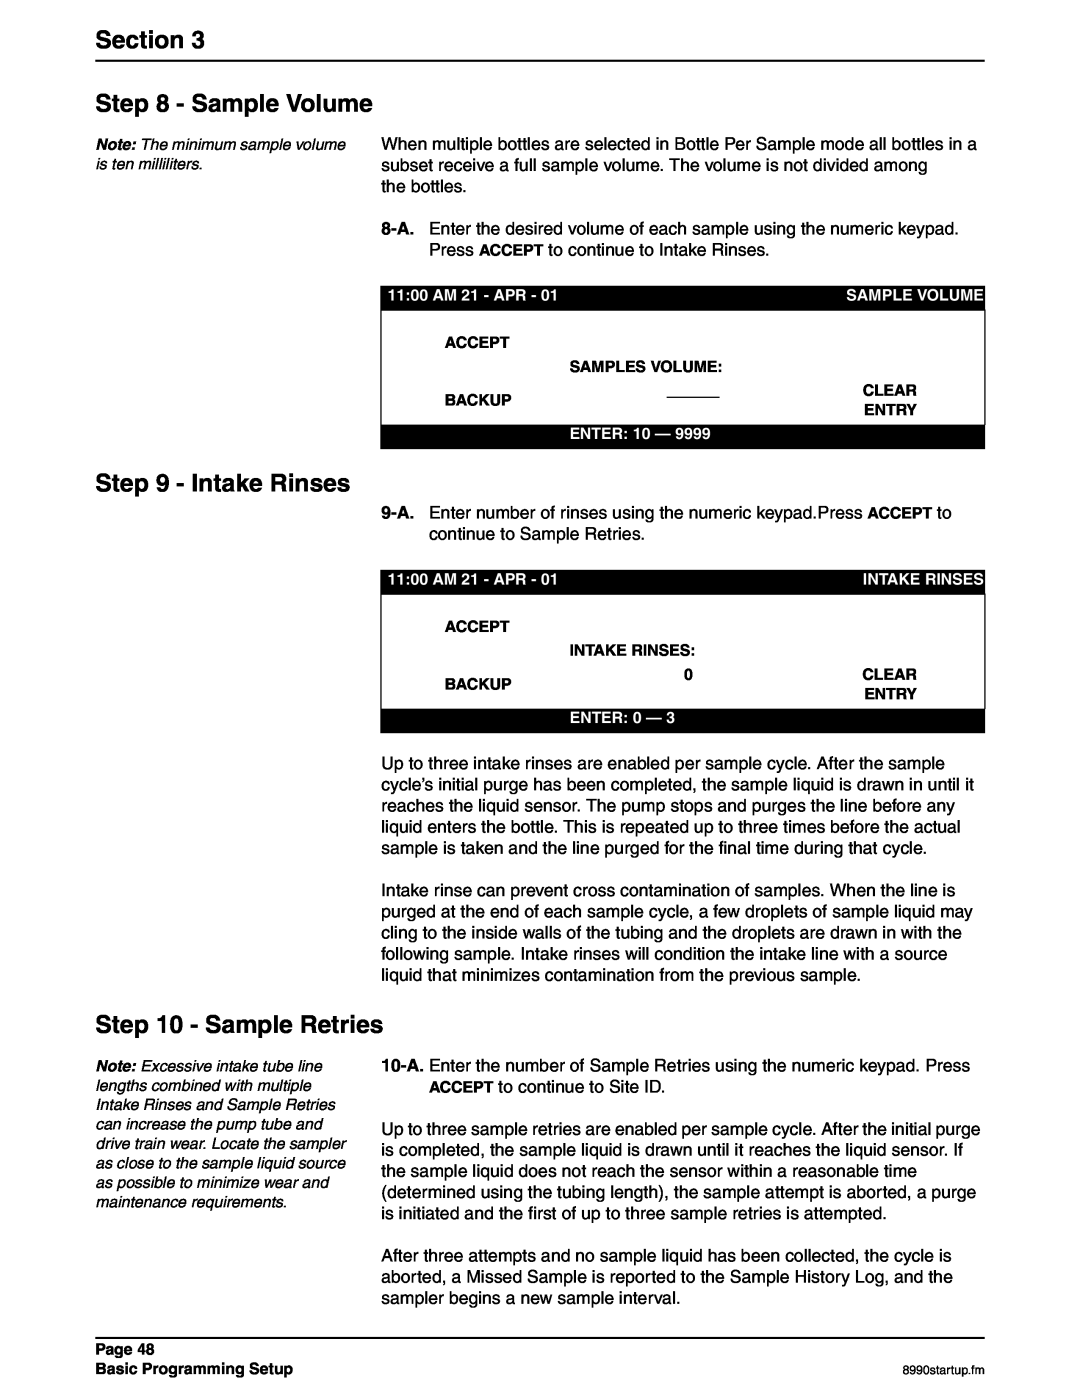 Hach 900 MAX manual Section - Sample Volume, Intake Rinses, Sample Retries 